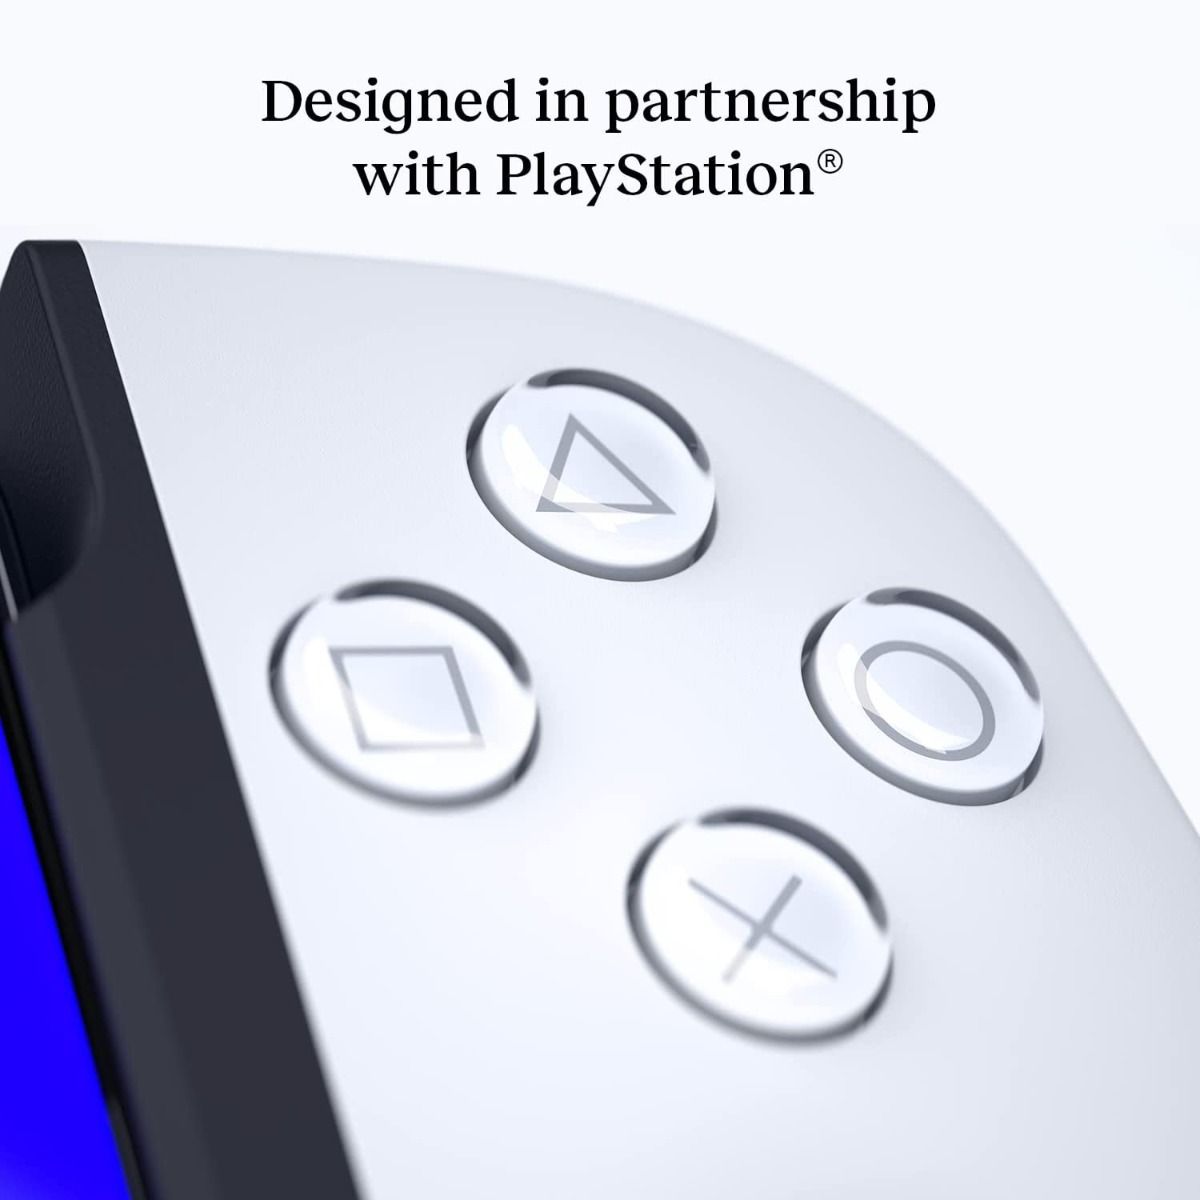 BACKBONE Gamepad para Android Playstation Edition (White)